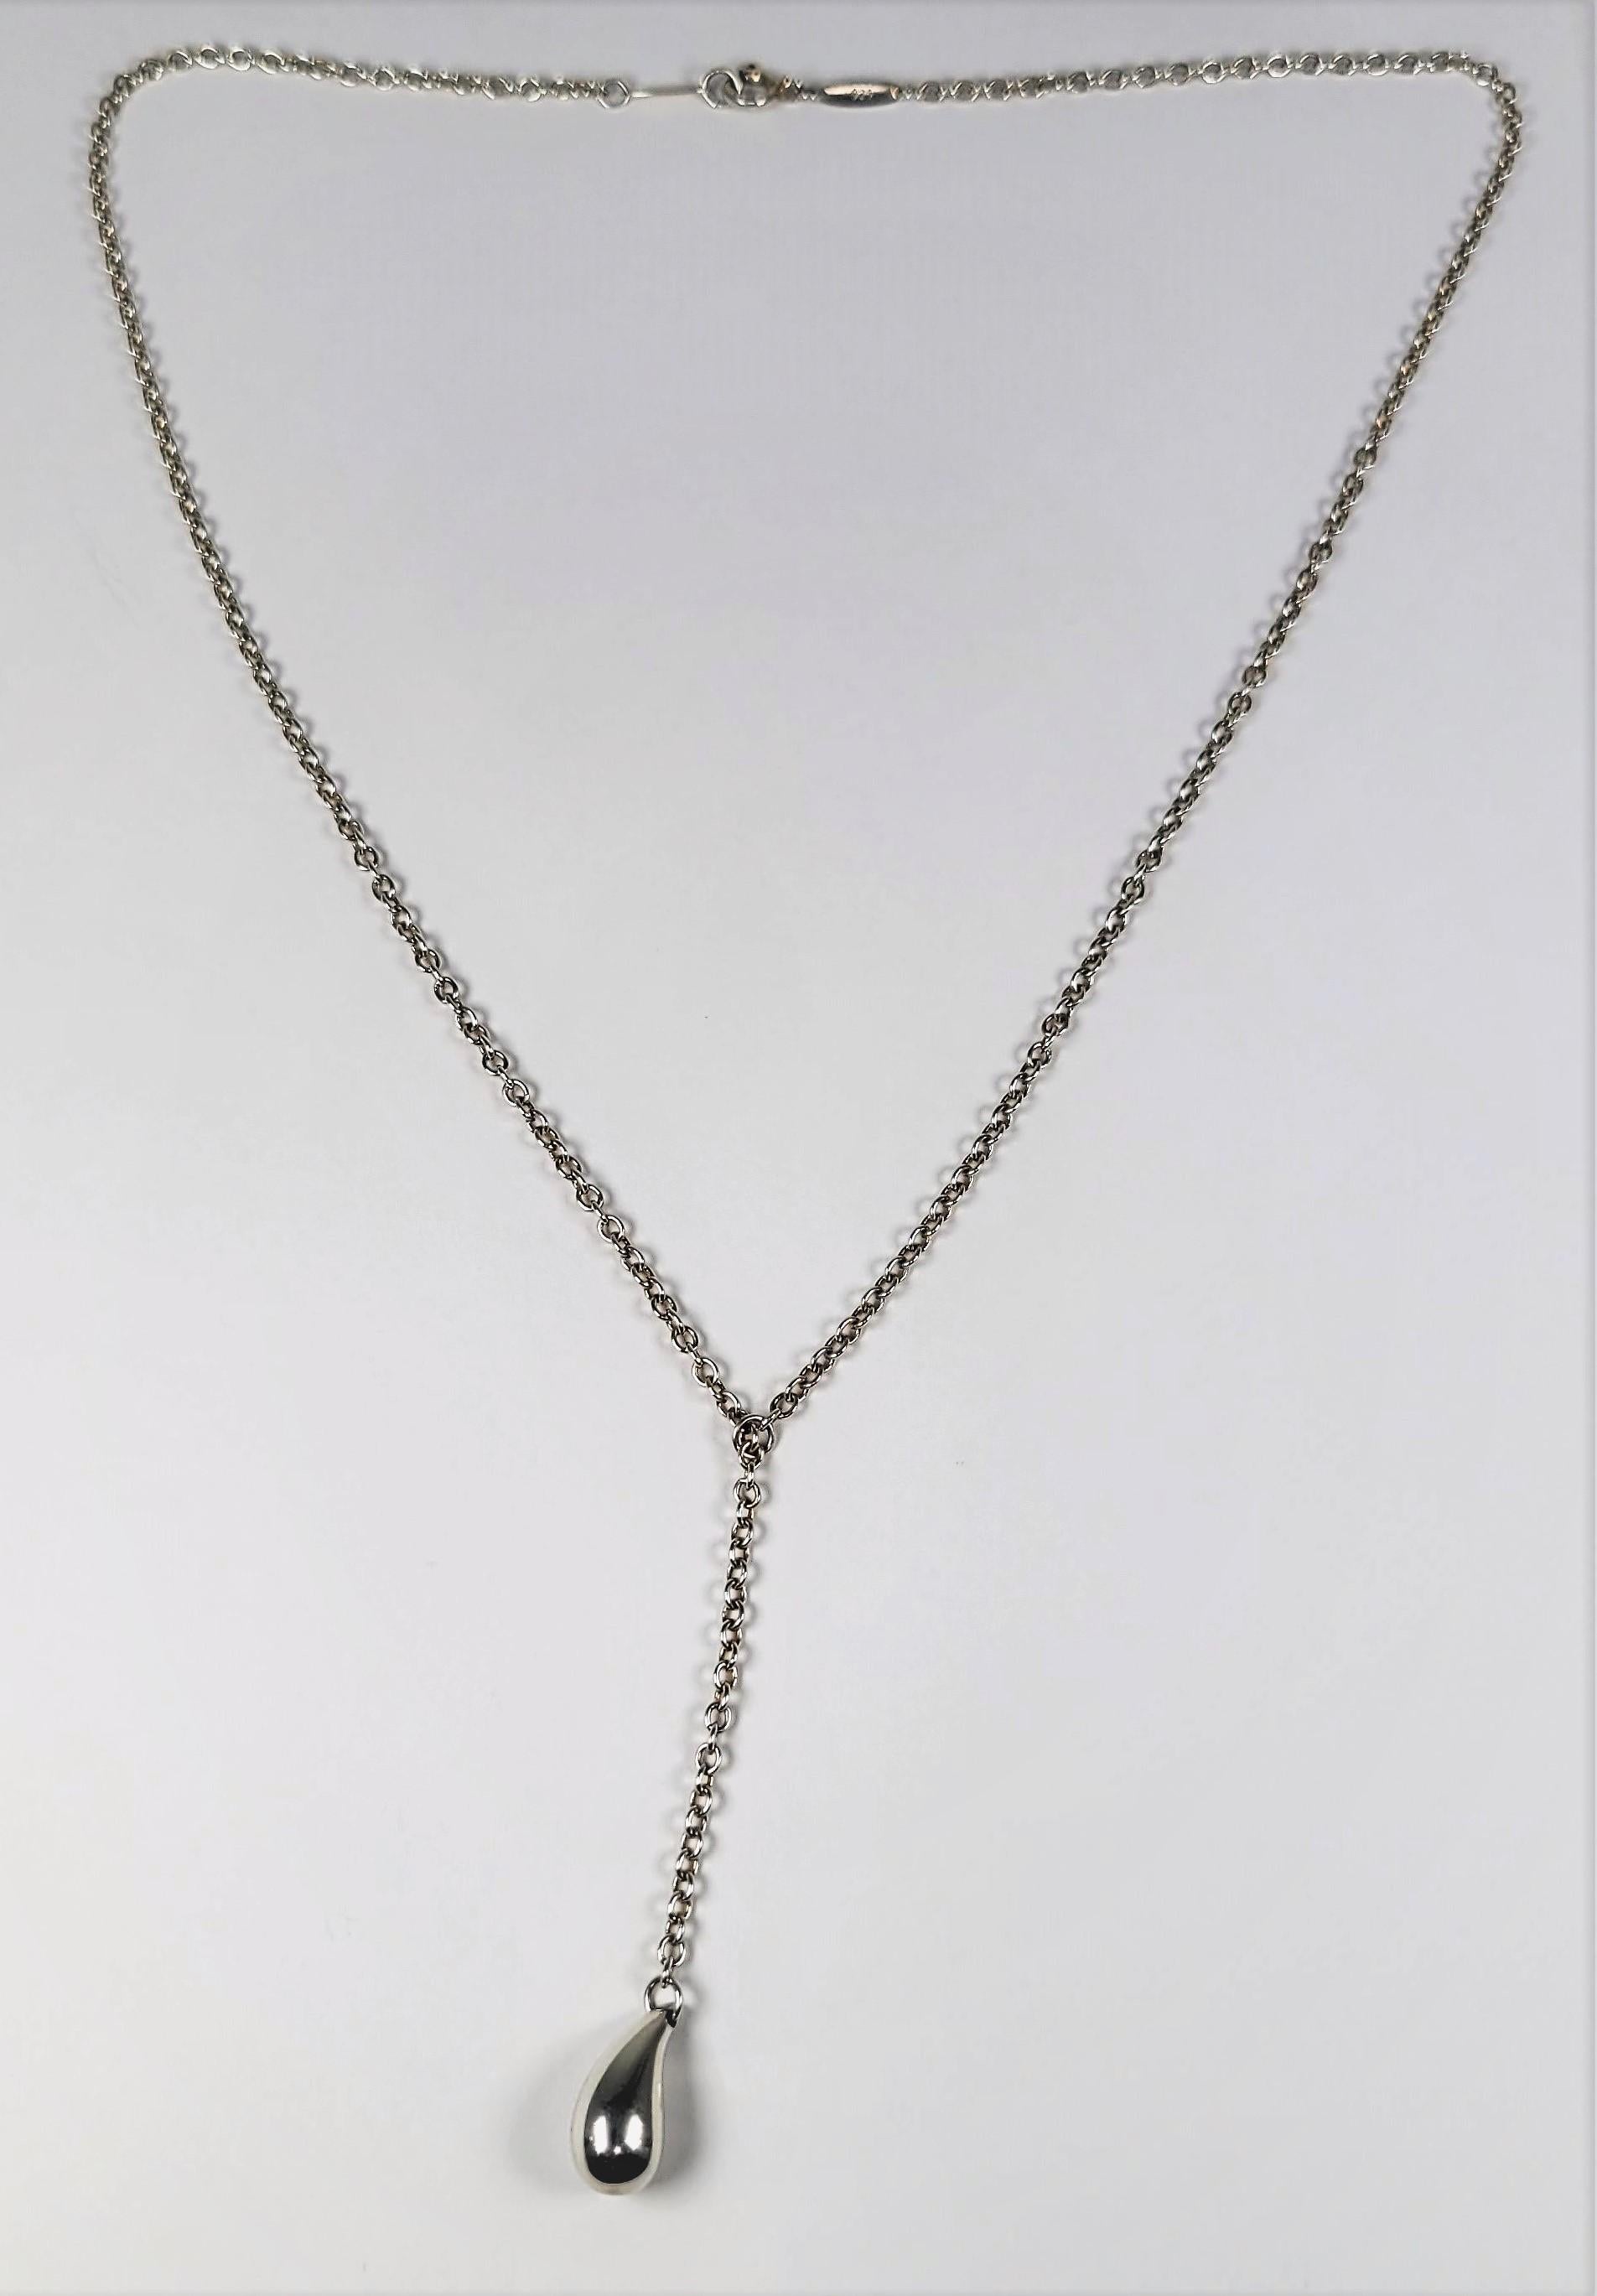 Modern Tiffany & Co. Teardrop Lariat Necklace by Elsa Peretti